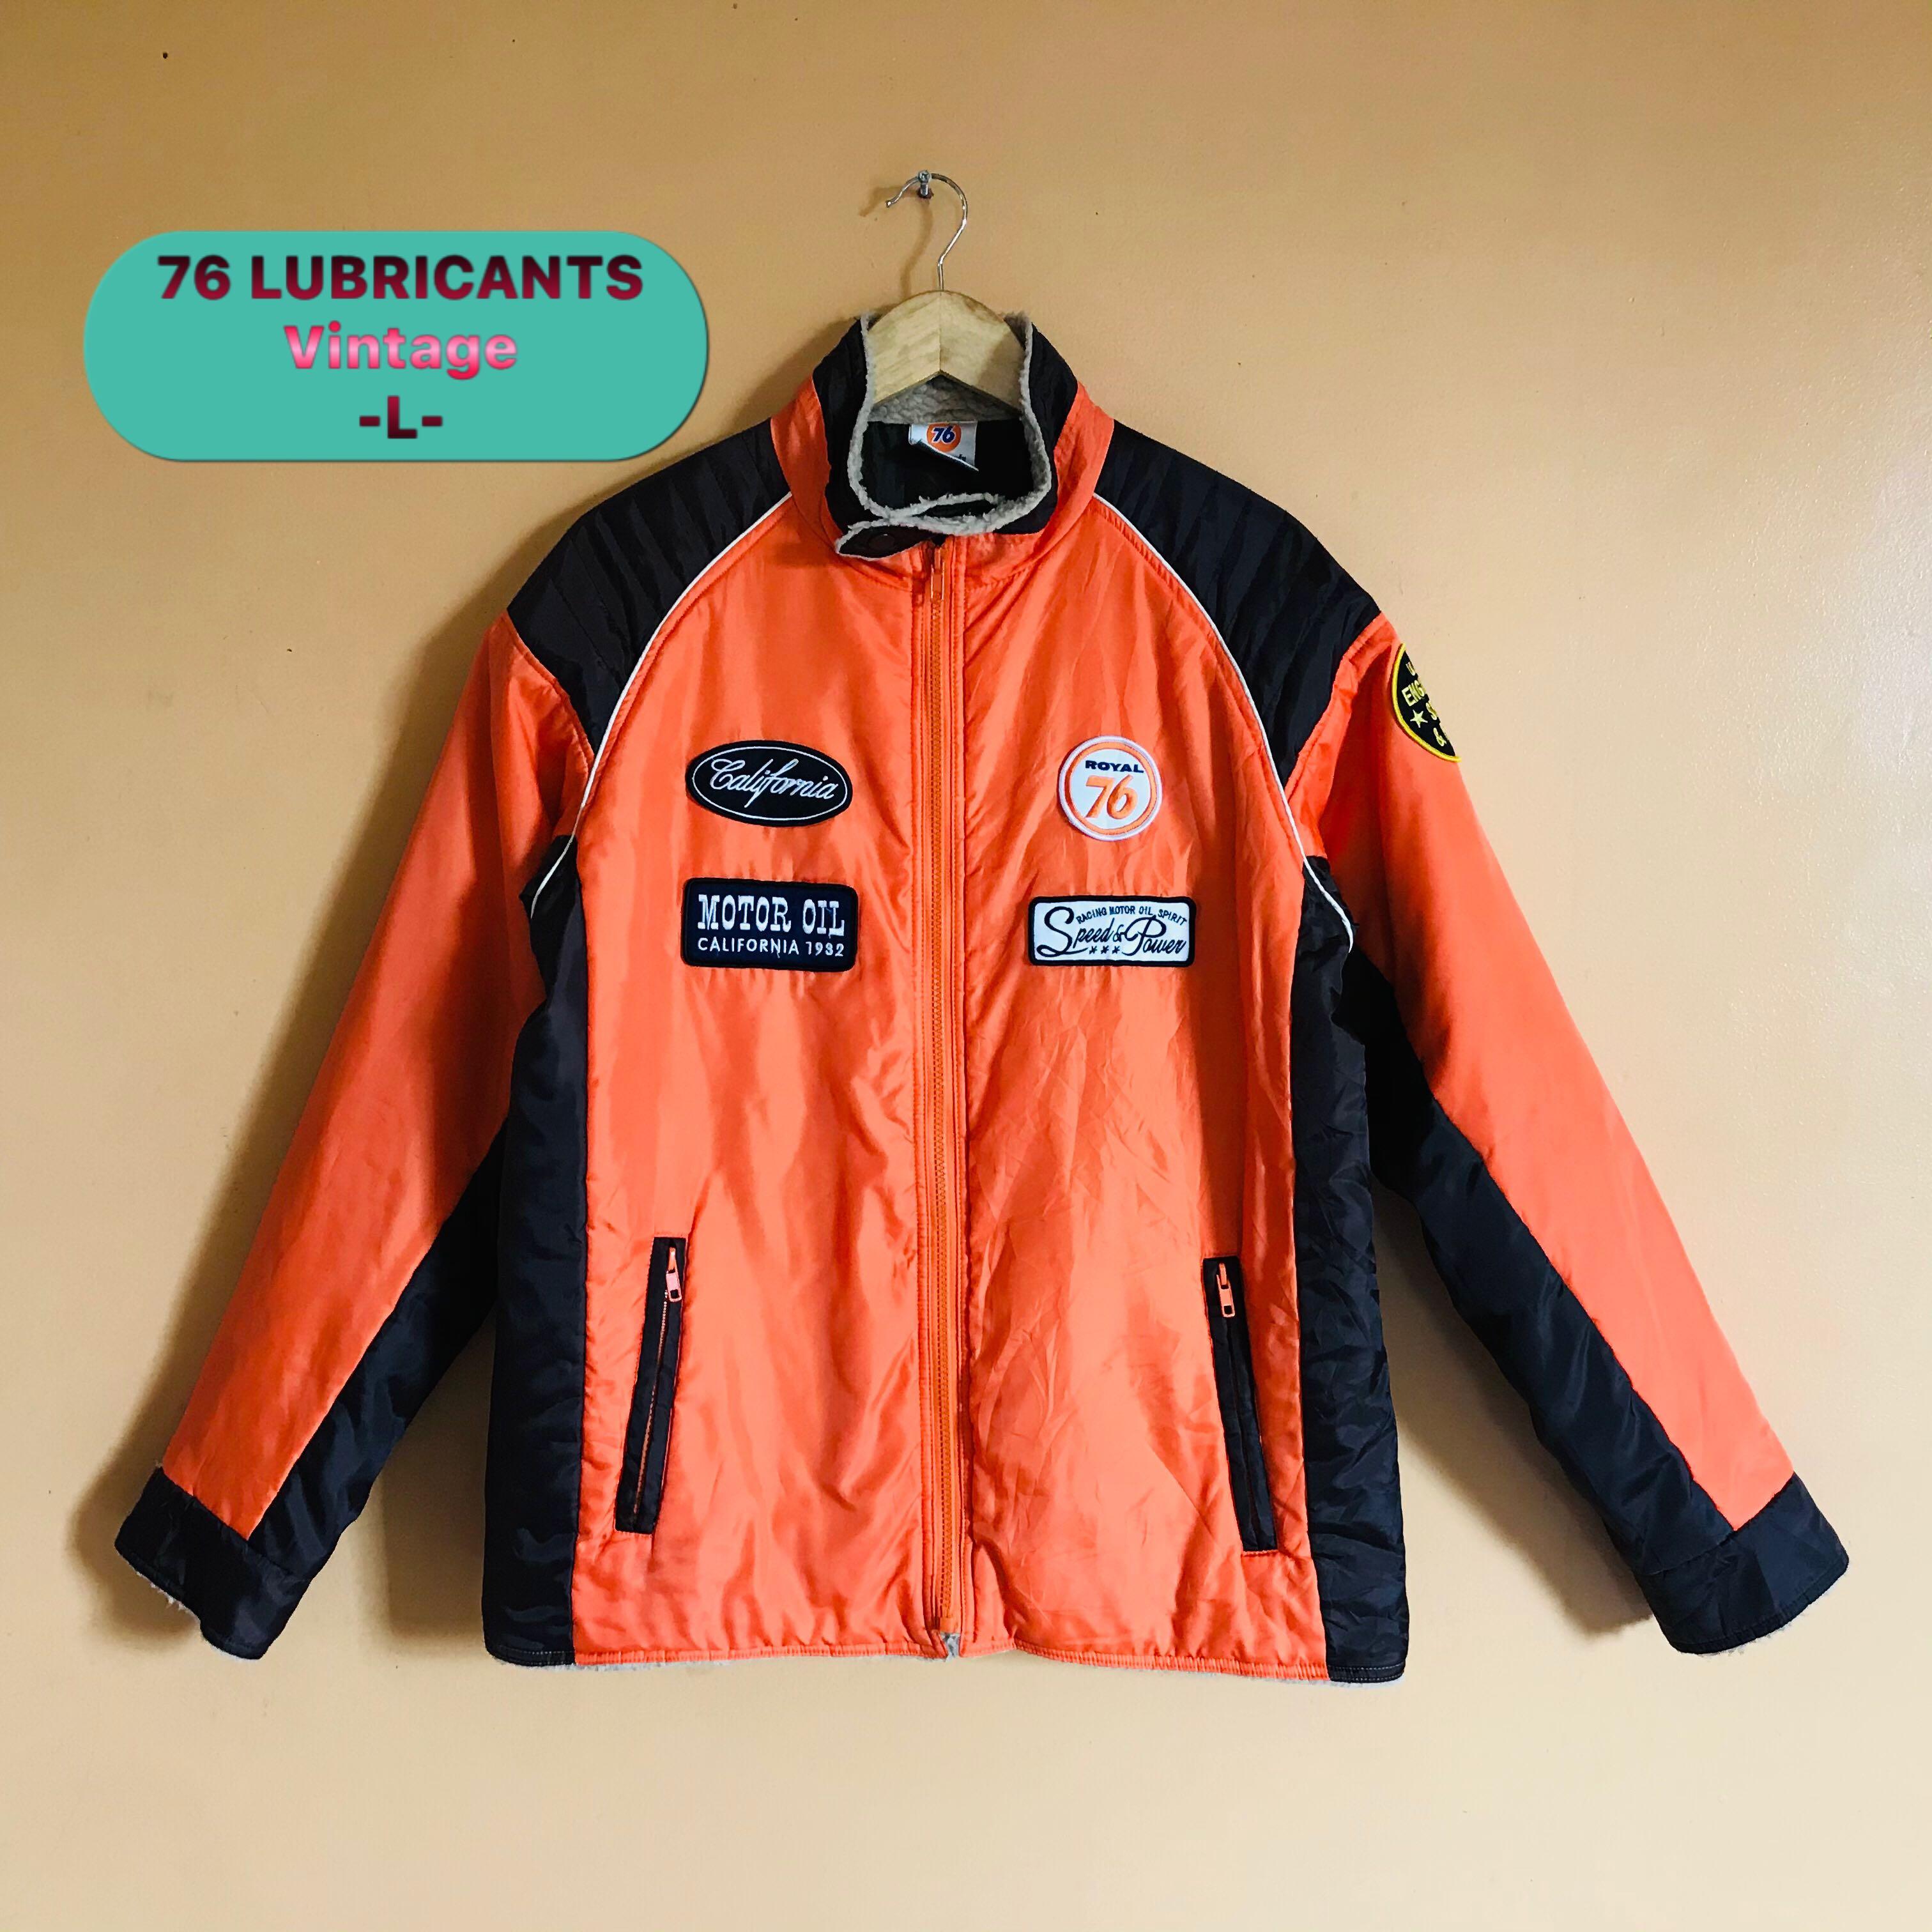 Vintage 76 LUBRICANTS Racing Jacket